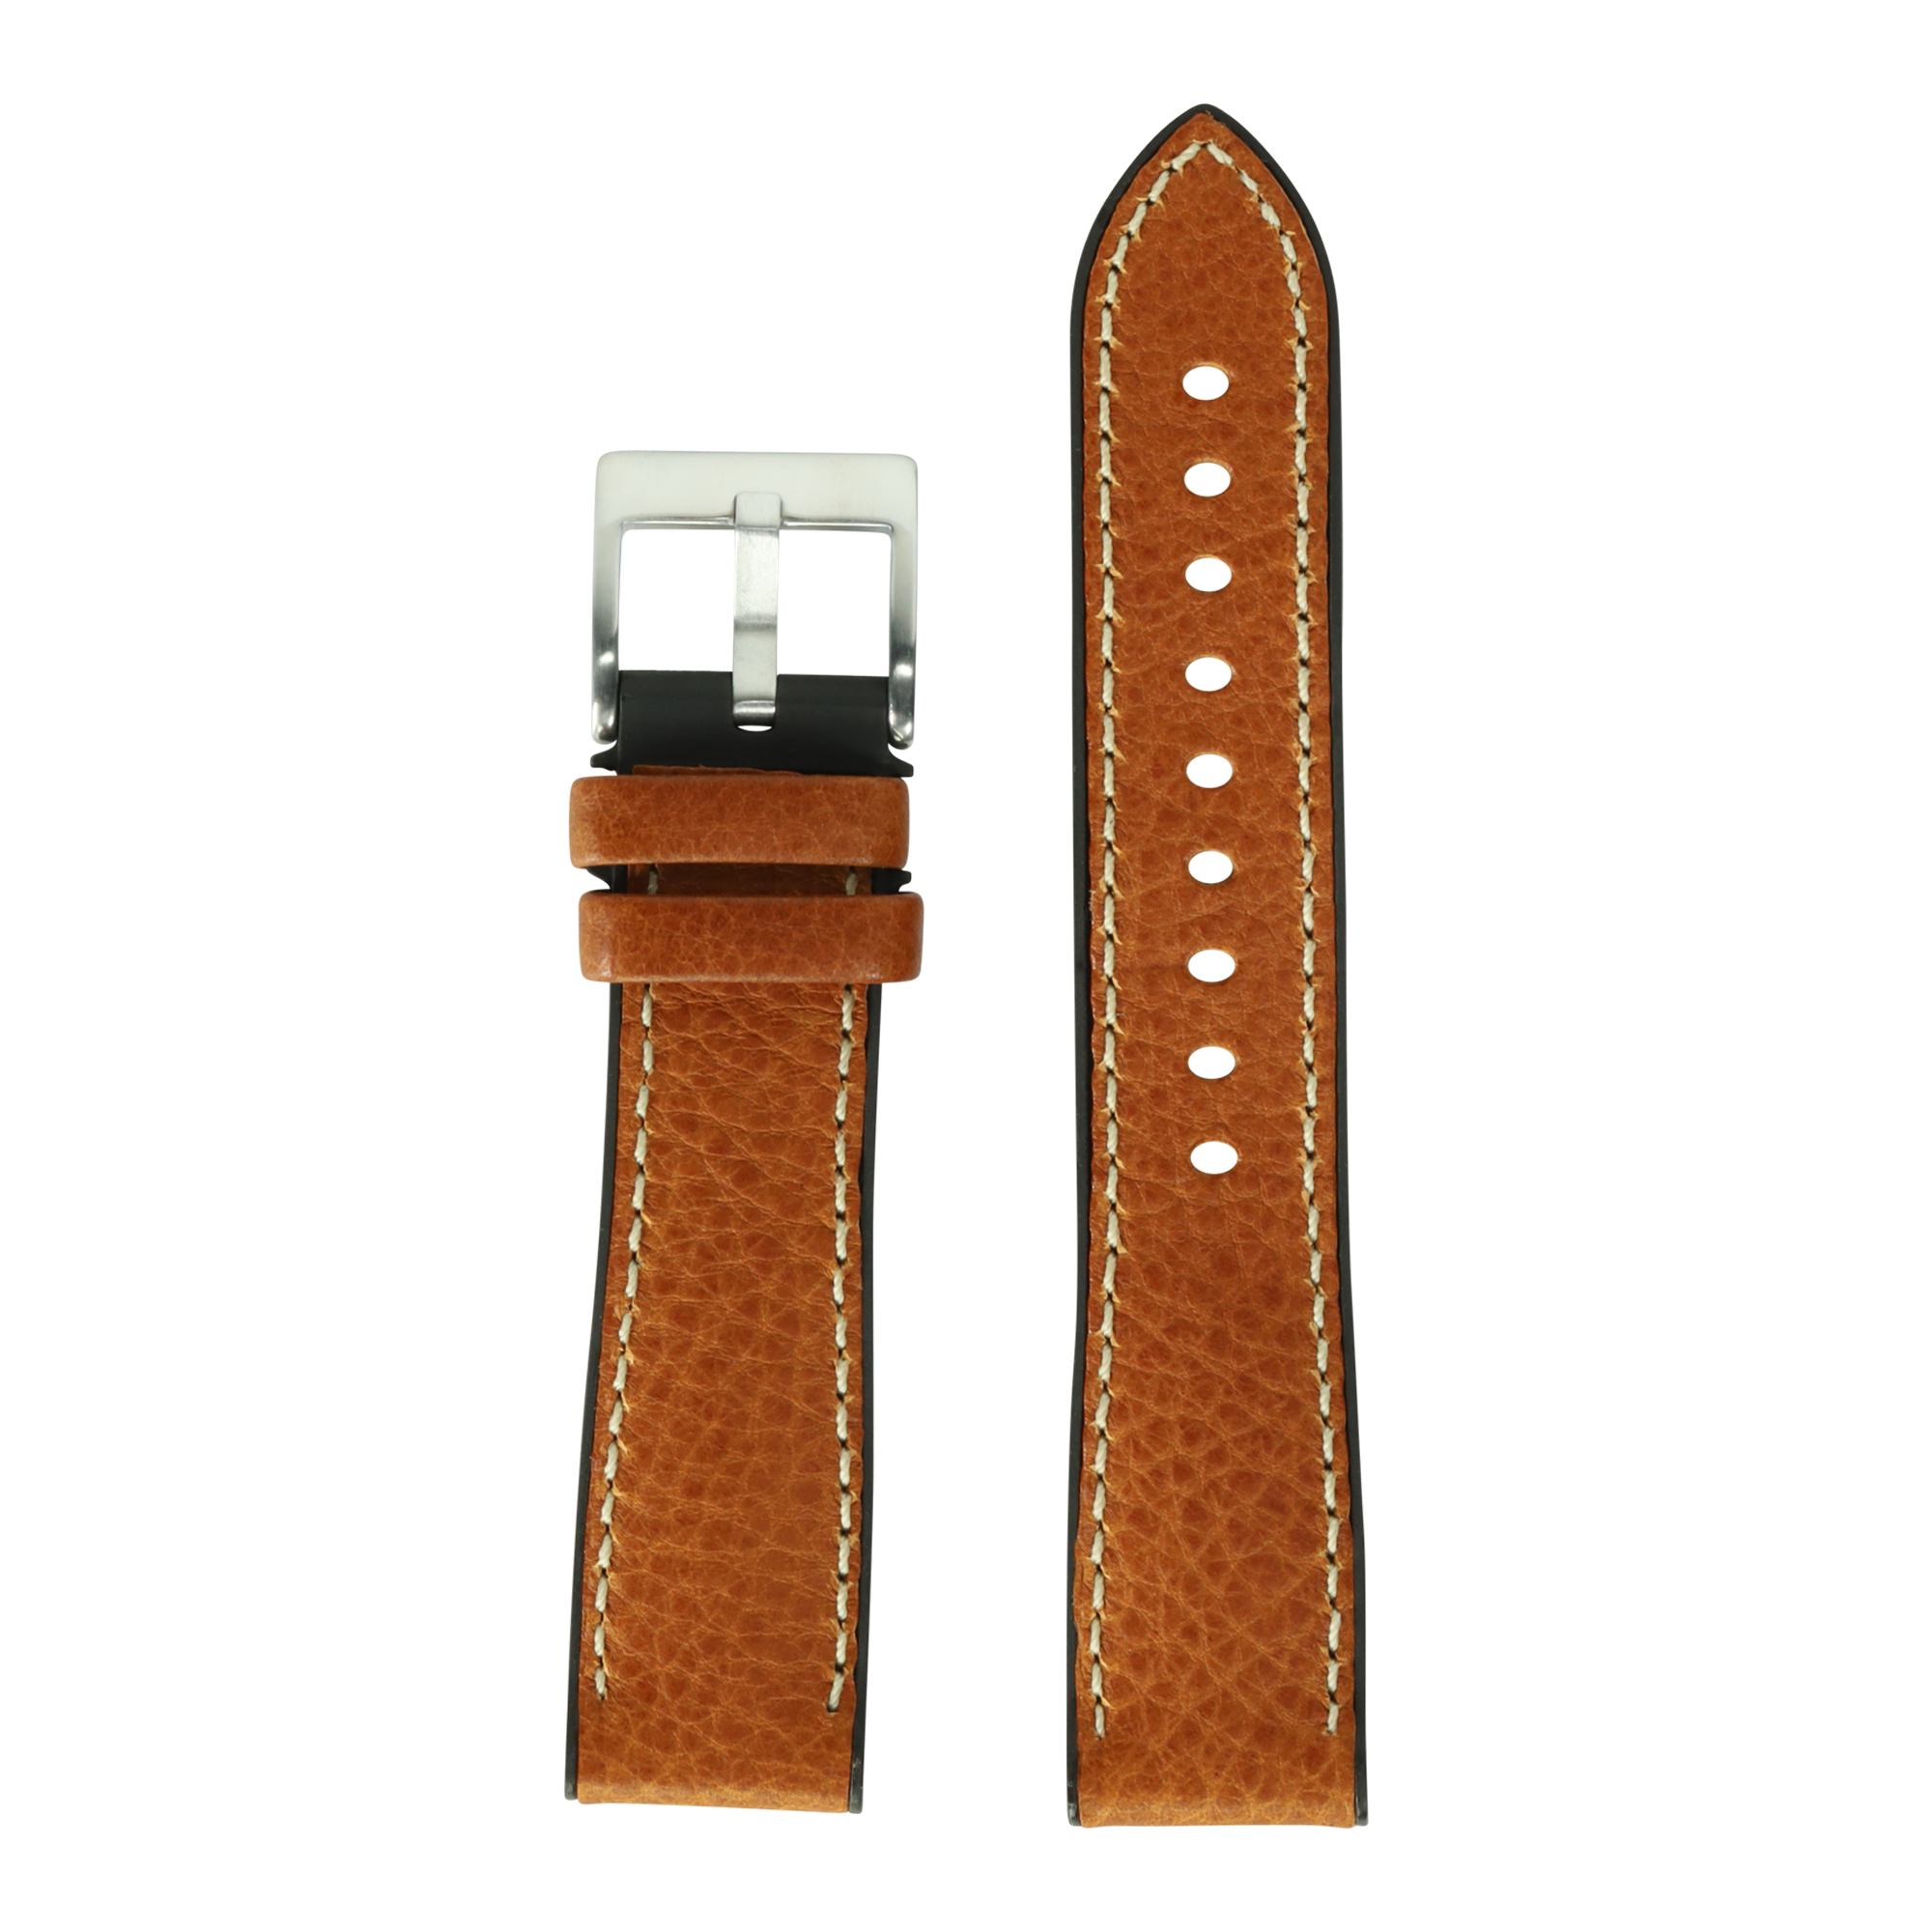 [Apple Watch] Italian Leather & FKM Rubber Hybrid